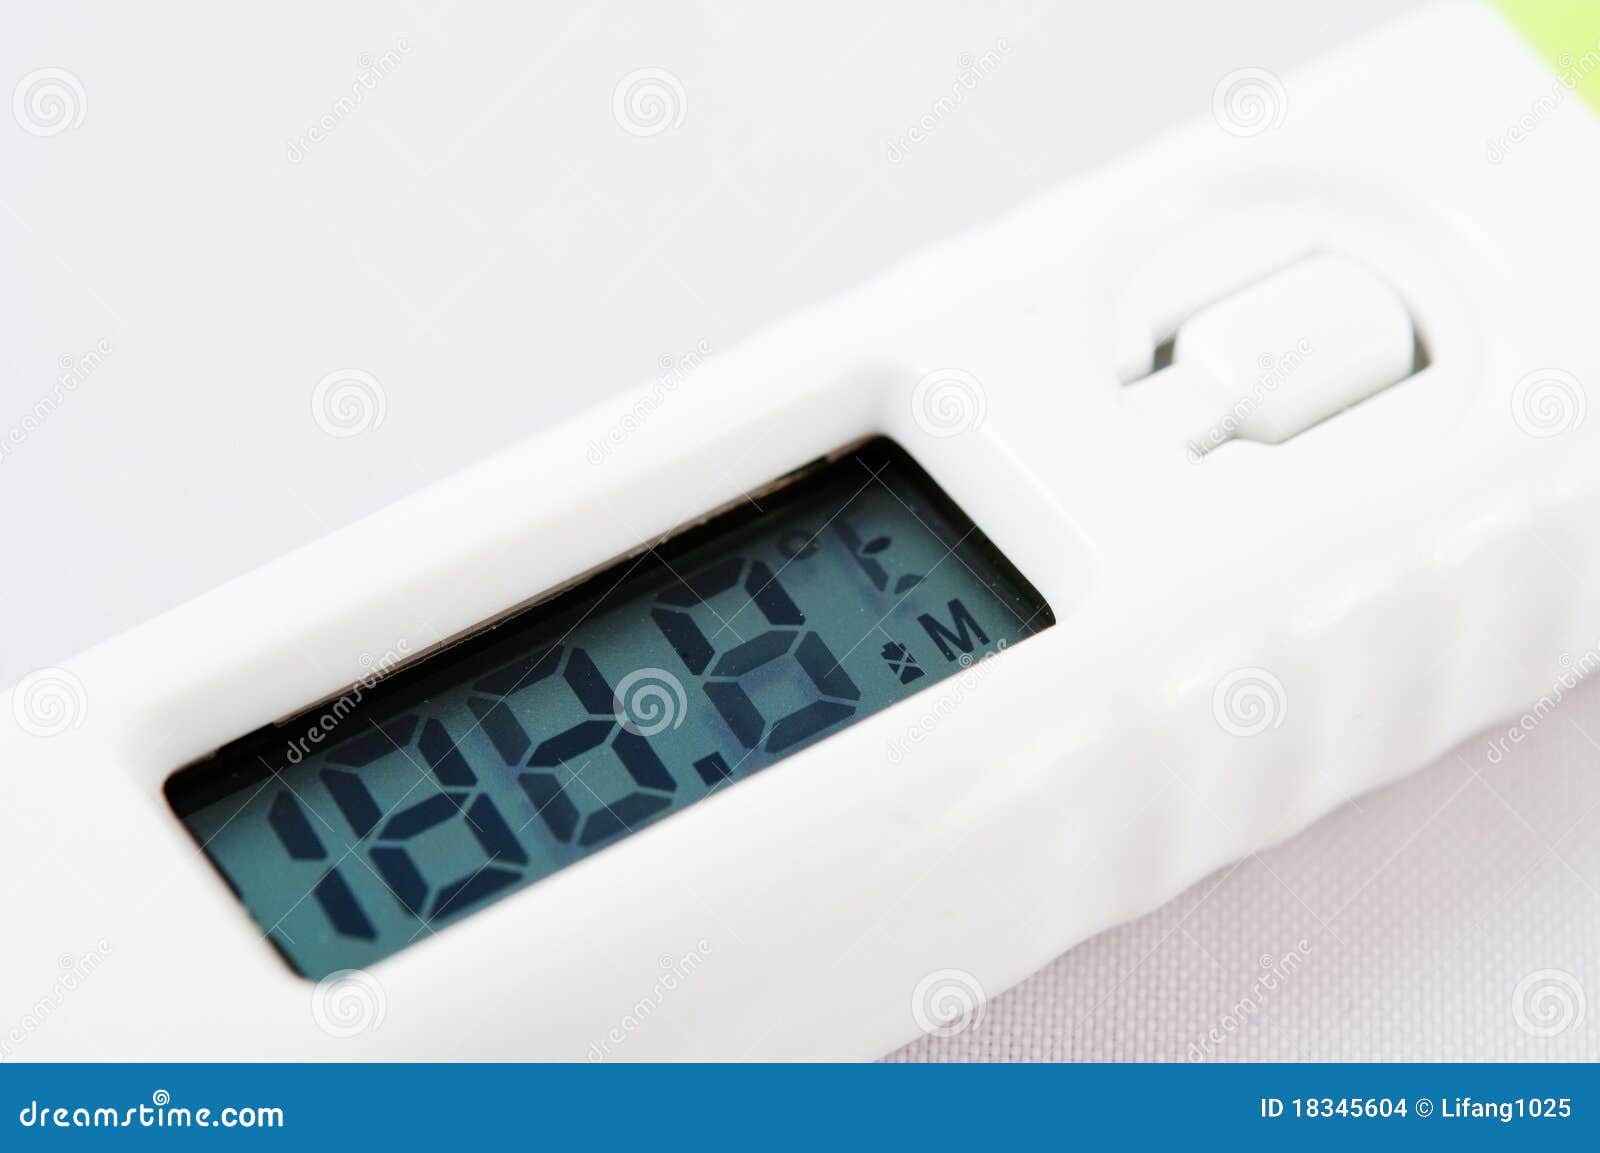 4,873 Laboratory Thermometer Stock Photos - Free & Royalty-Free